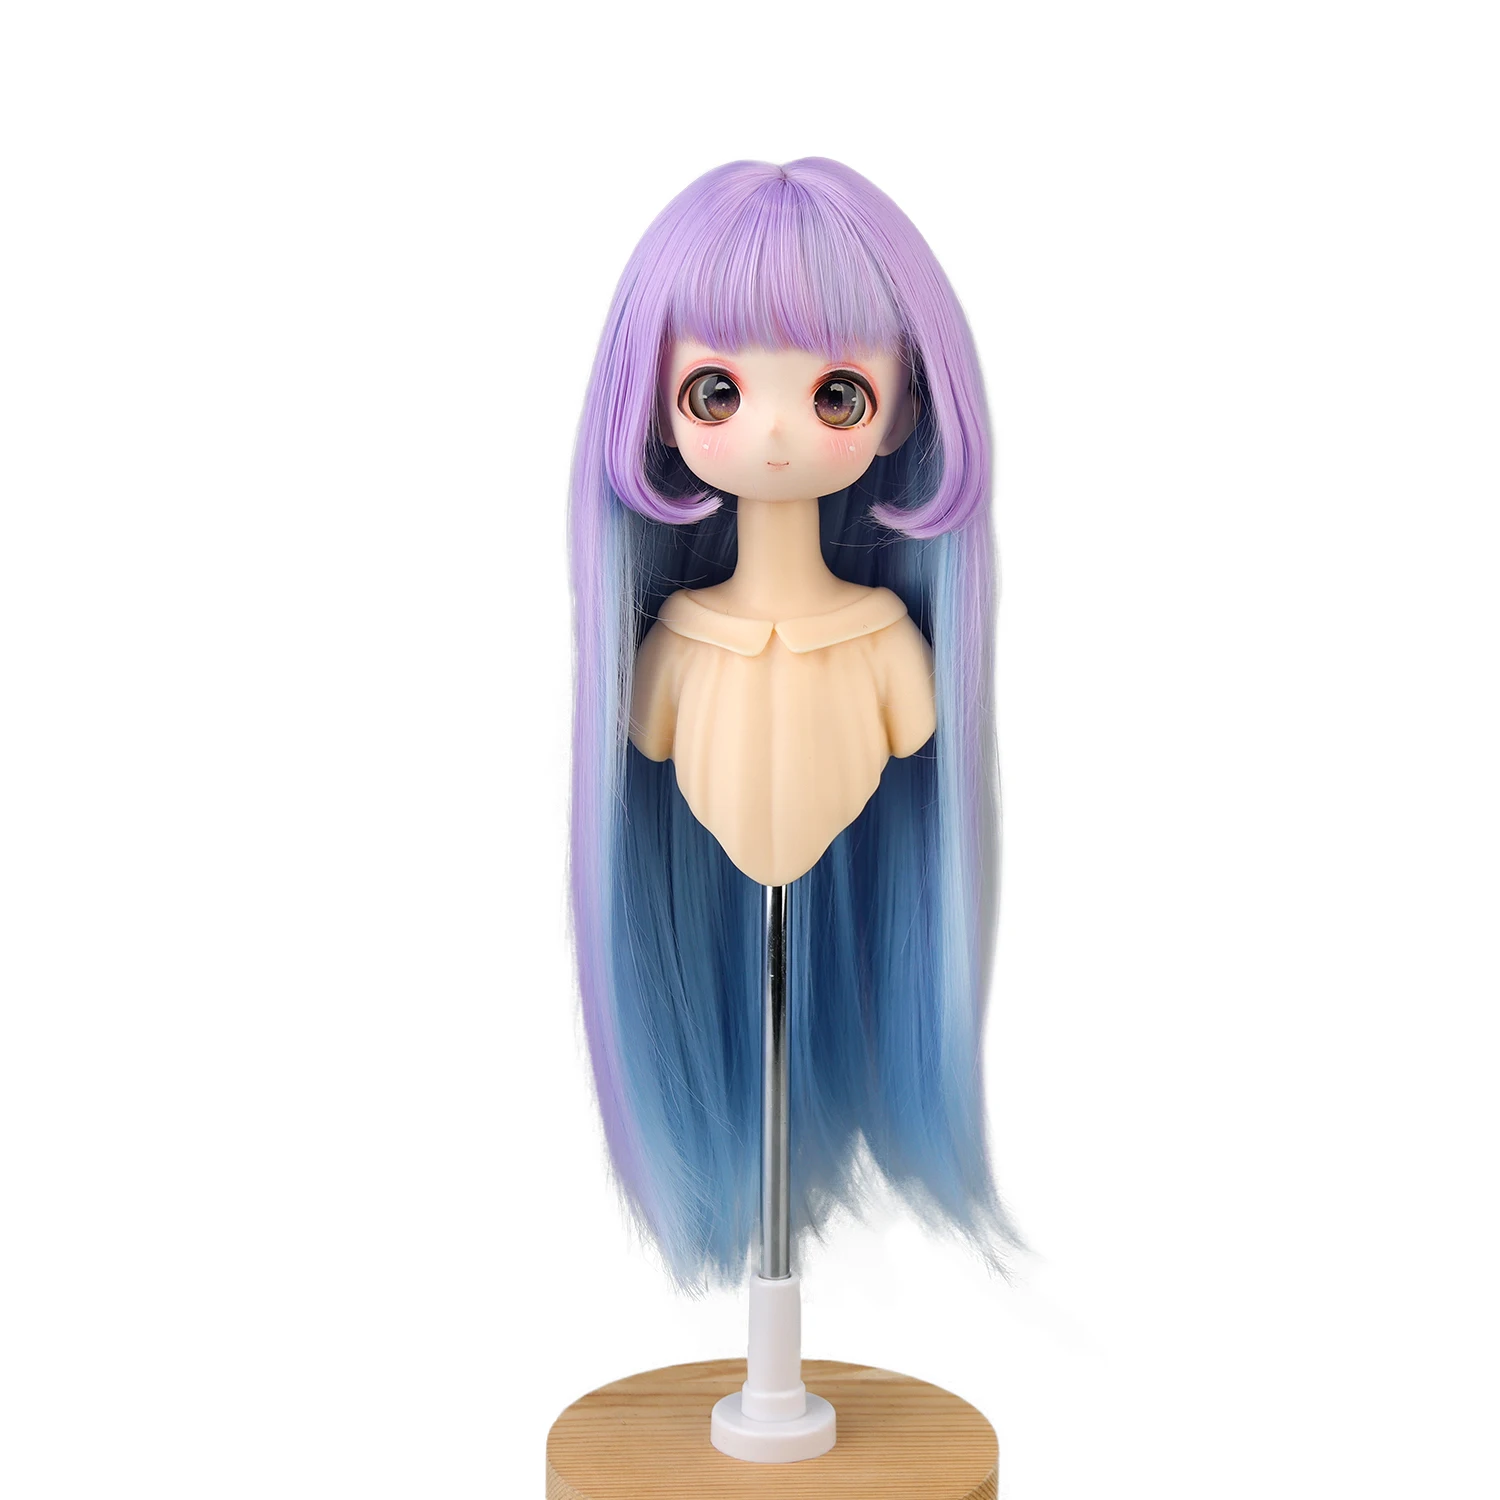 

Aidolla BJD Wigs Hair 1/3 Long Blue Purple Mix With Bangs High temperature Fiber For Dollfie Dream Doll 9'' head DIY Doll Tress